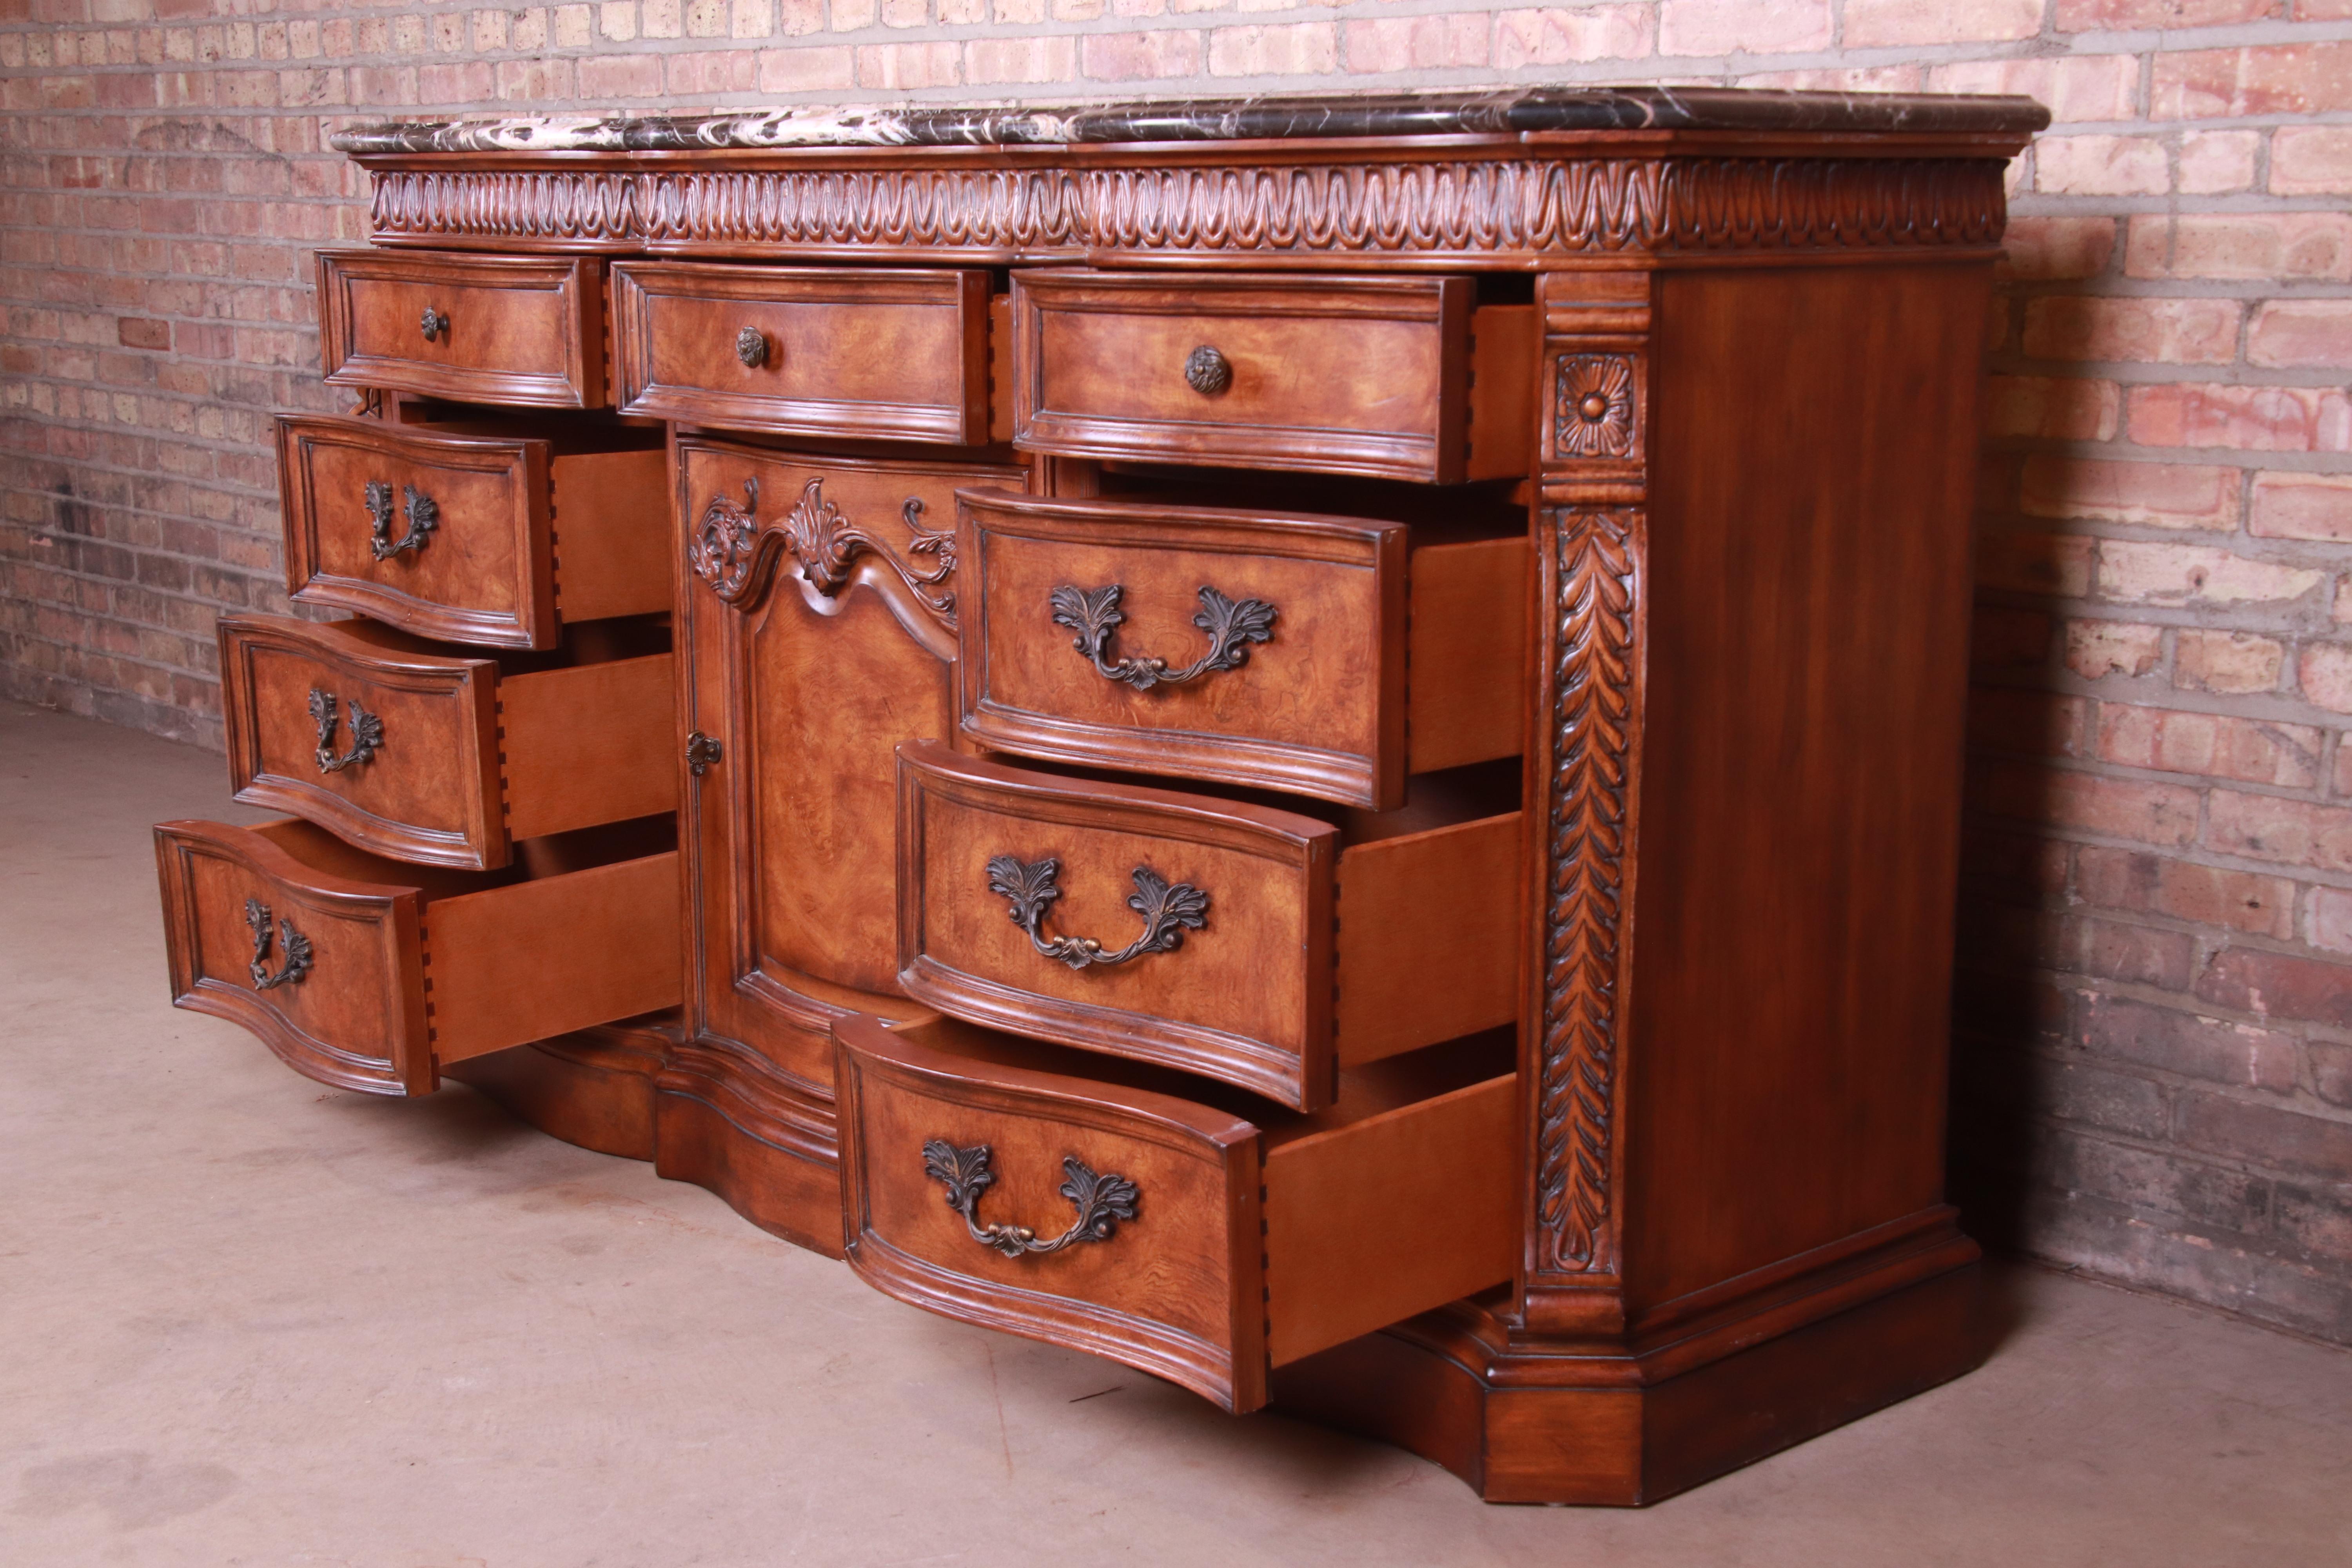 20th Century Drexel Heritage Italian Provincial Burled Walnut Marble-Top Dresser or Sideboard